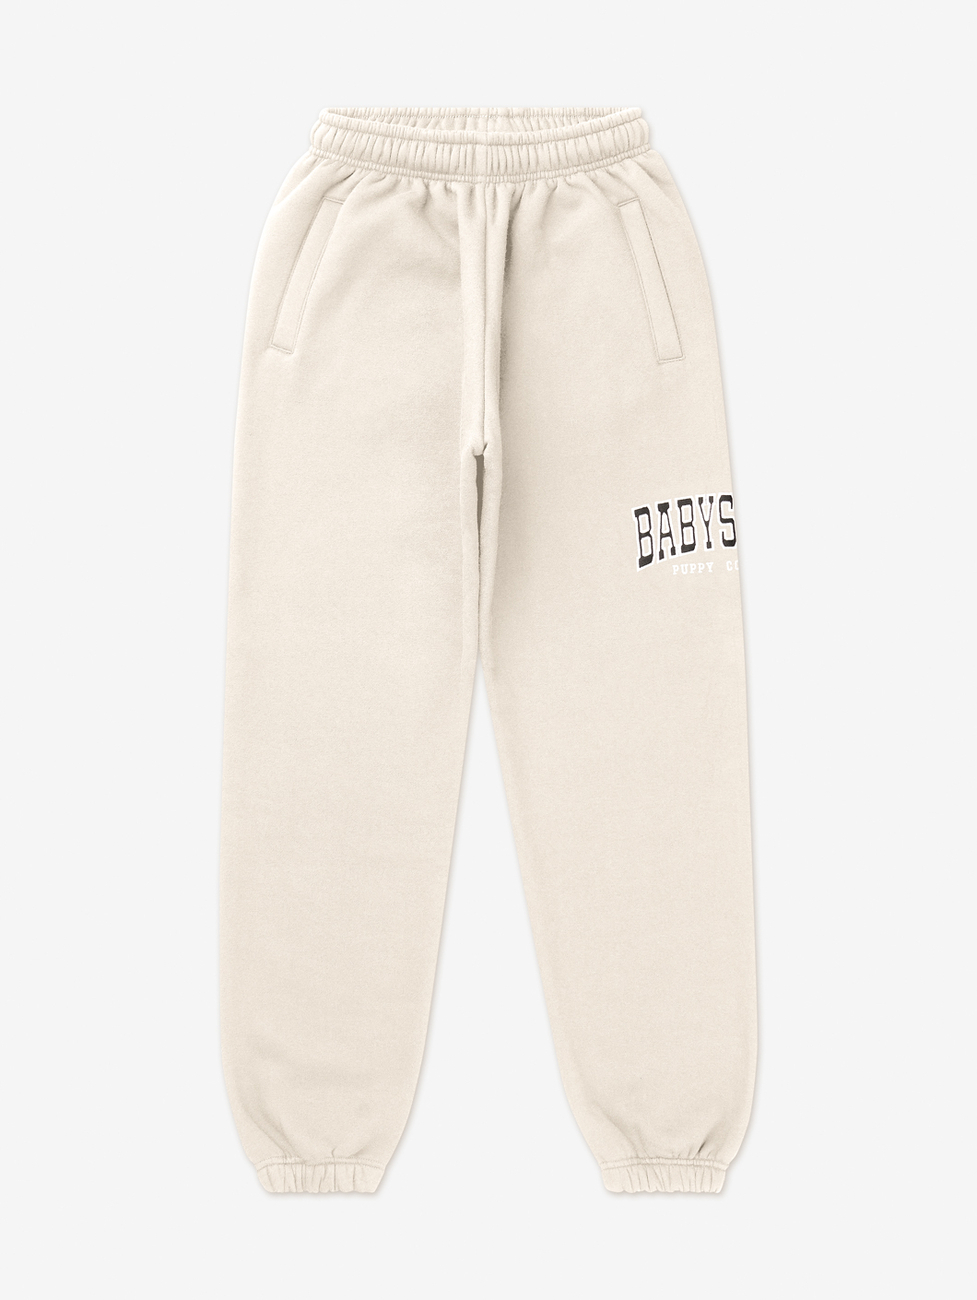 Babystaff College Sweatpants - cream XL